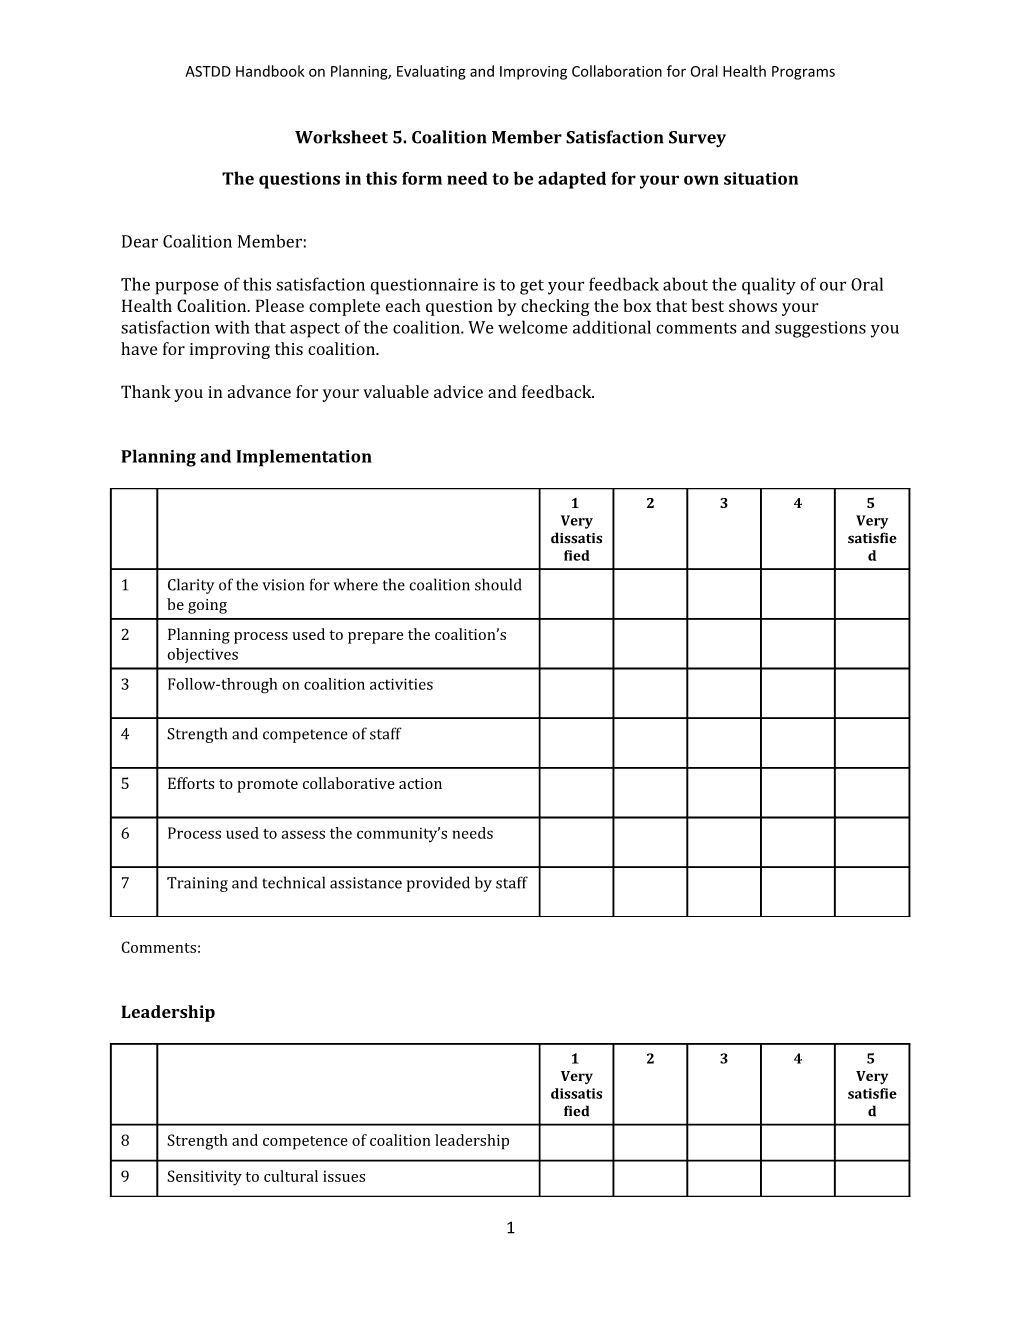 Worksheet 5. Coalition Member Satisfaction Survey